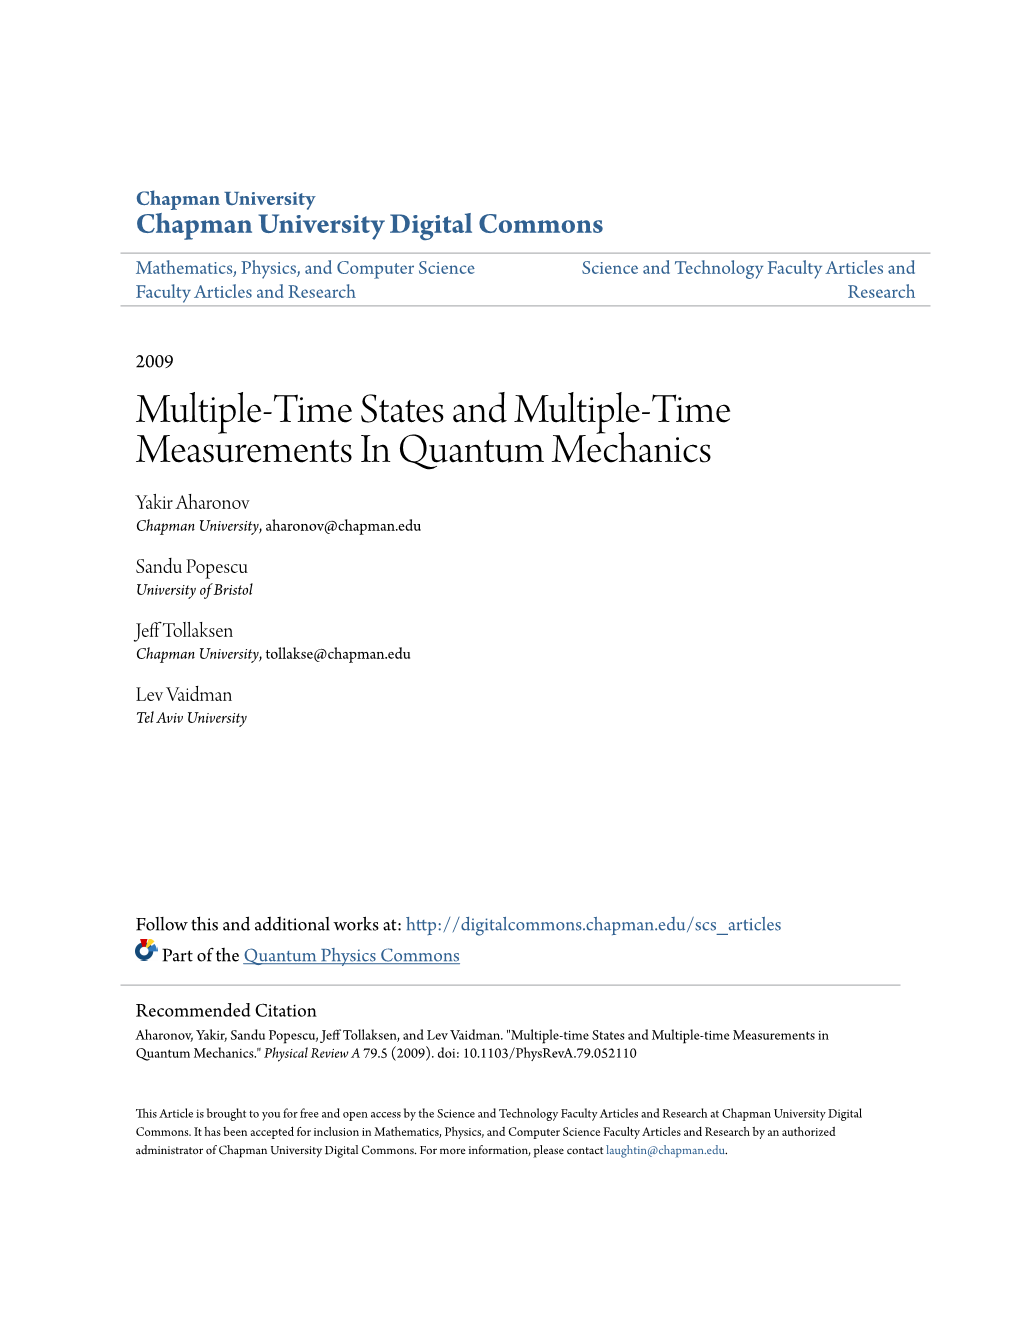 Multiple-Time States and Multiple-Time Measurements in Quantum Mechanics Yakir Aharonov Chapman University, Aharonov@Chapman.Edu